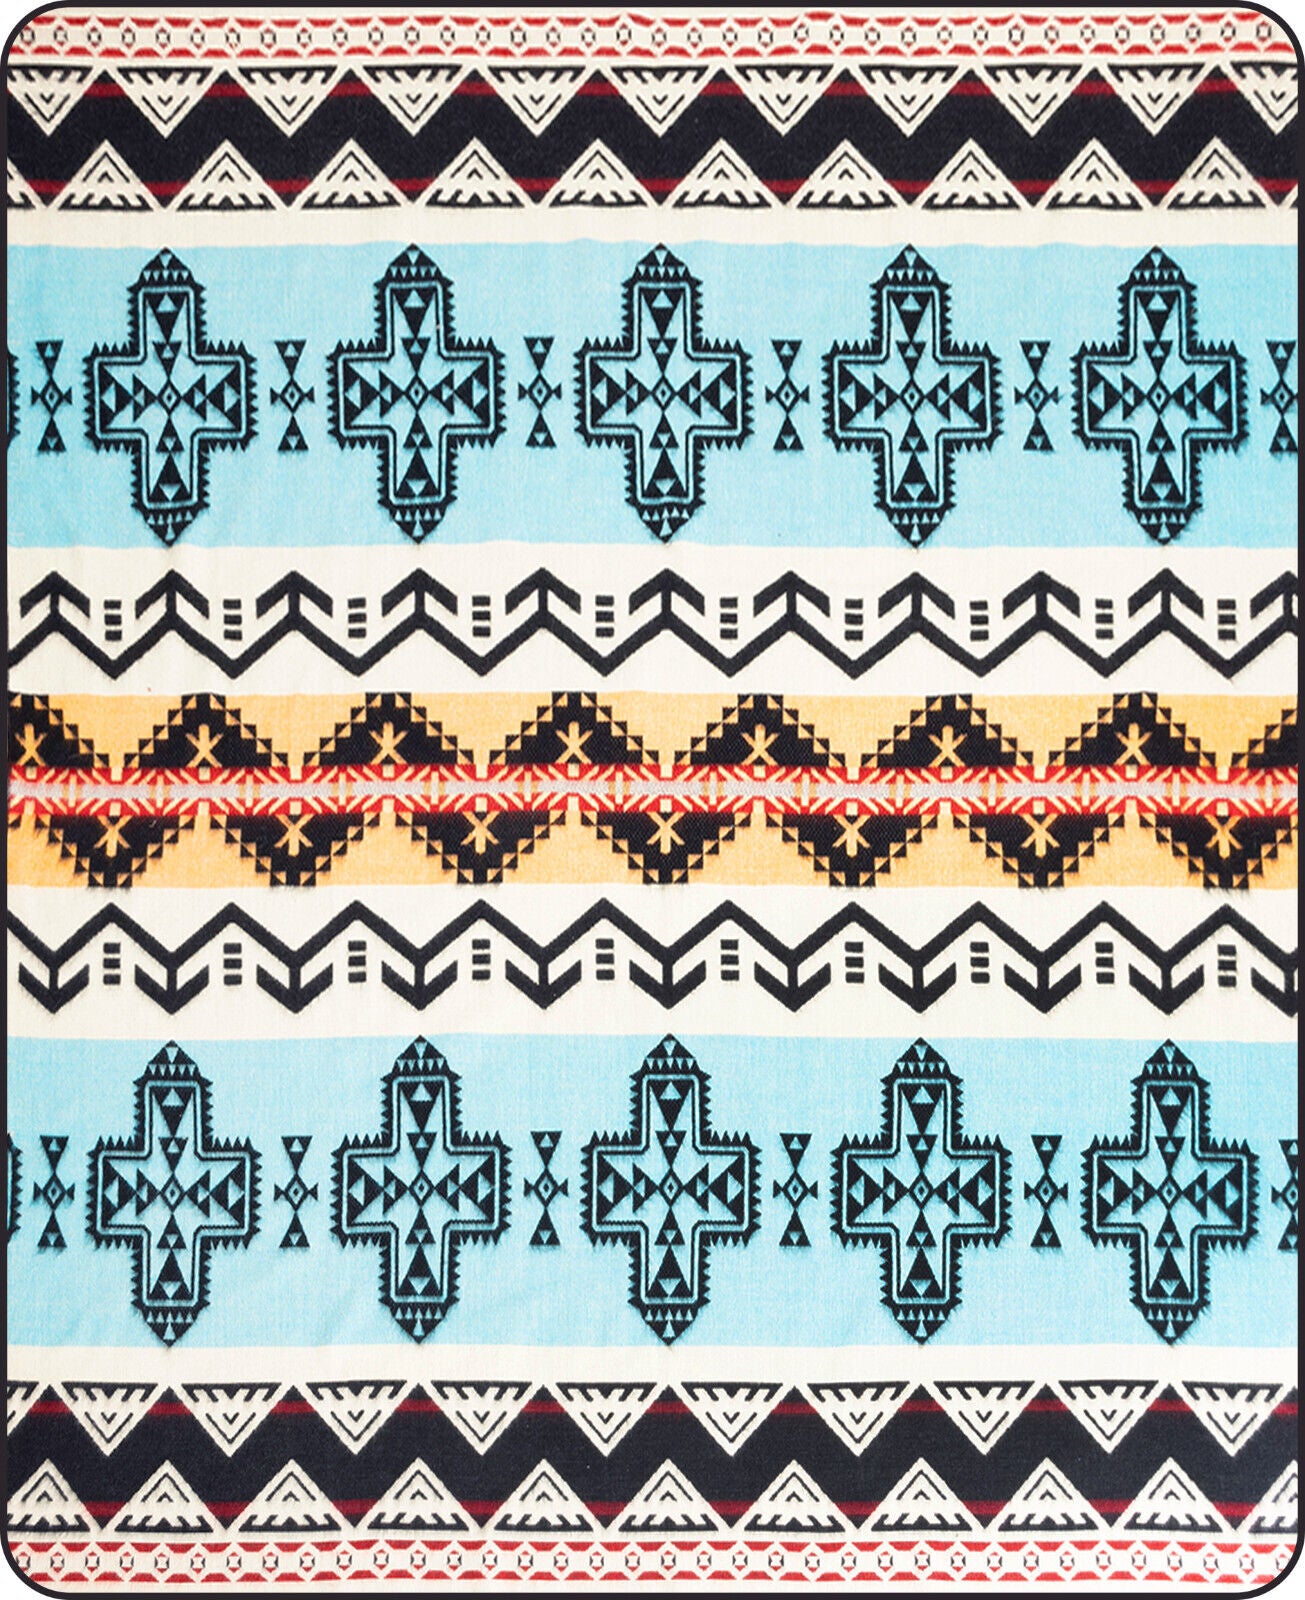 Angashco - Baby Alpaca Blanket - Extra Large Reversible - Aztec Cross Southwest Pattern - Black/Sky Blue/Yellow